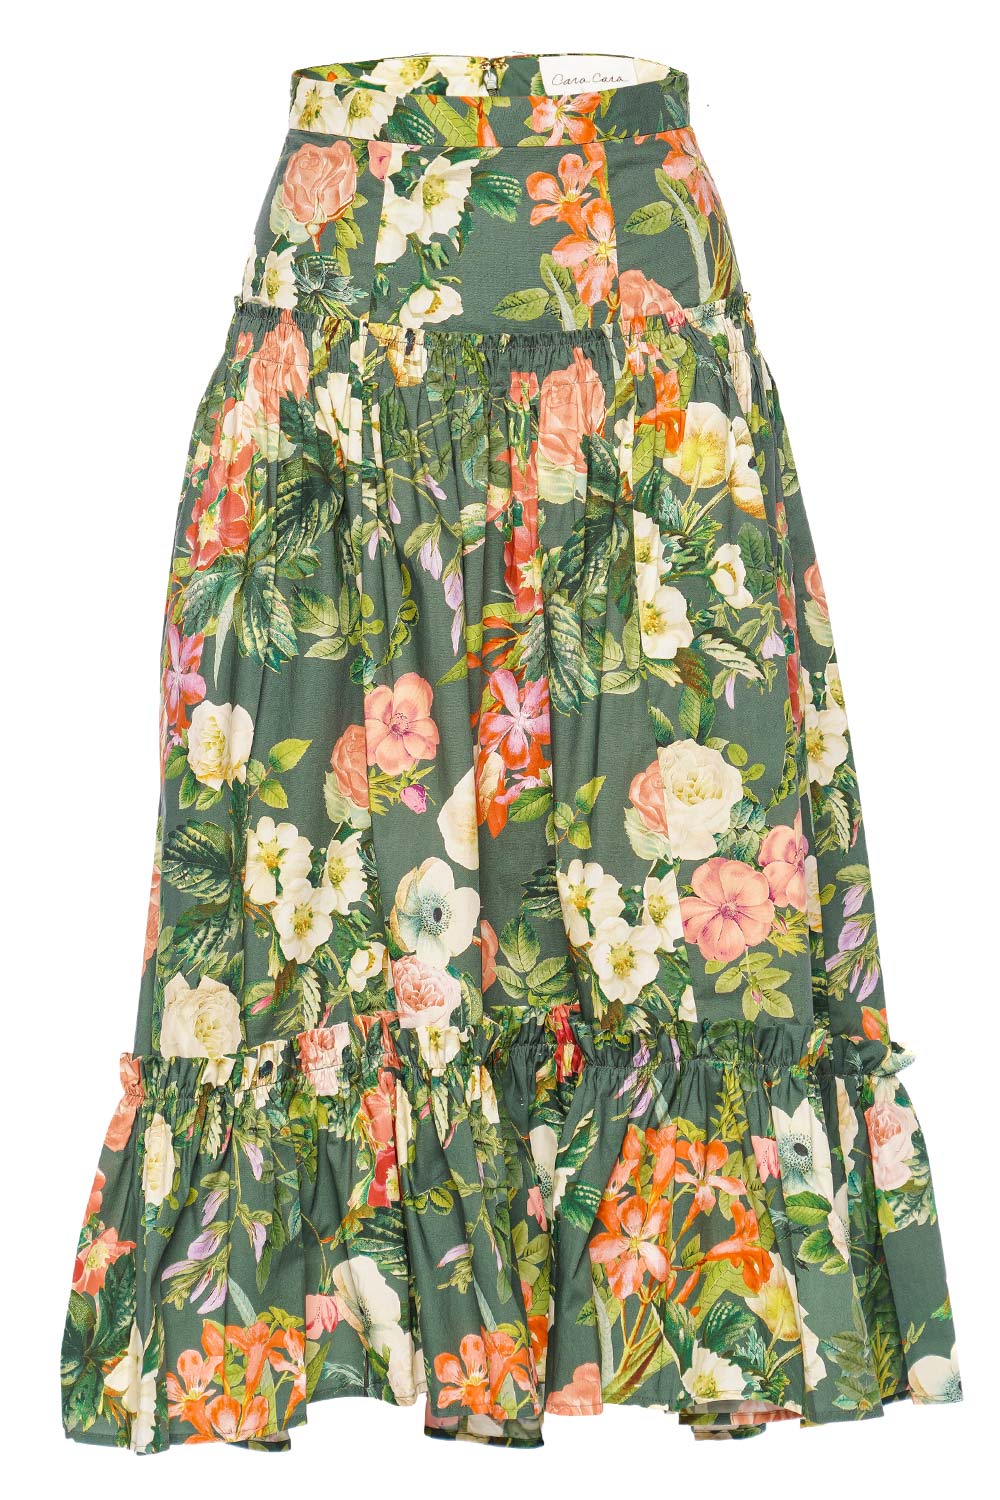 Cara Cara Tisbury Olive Kingston Floral Midi Skirt